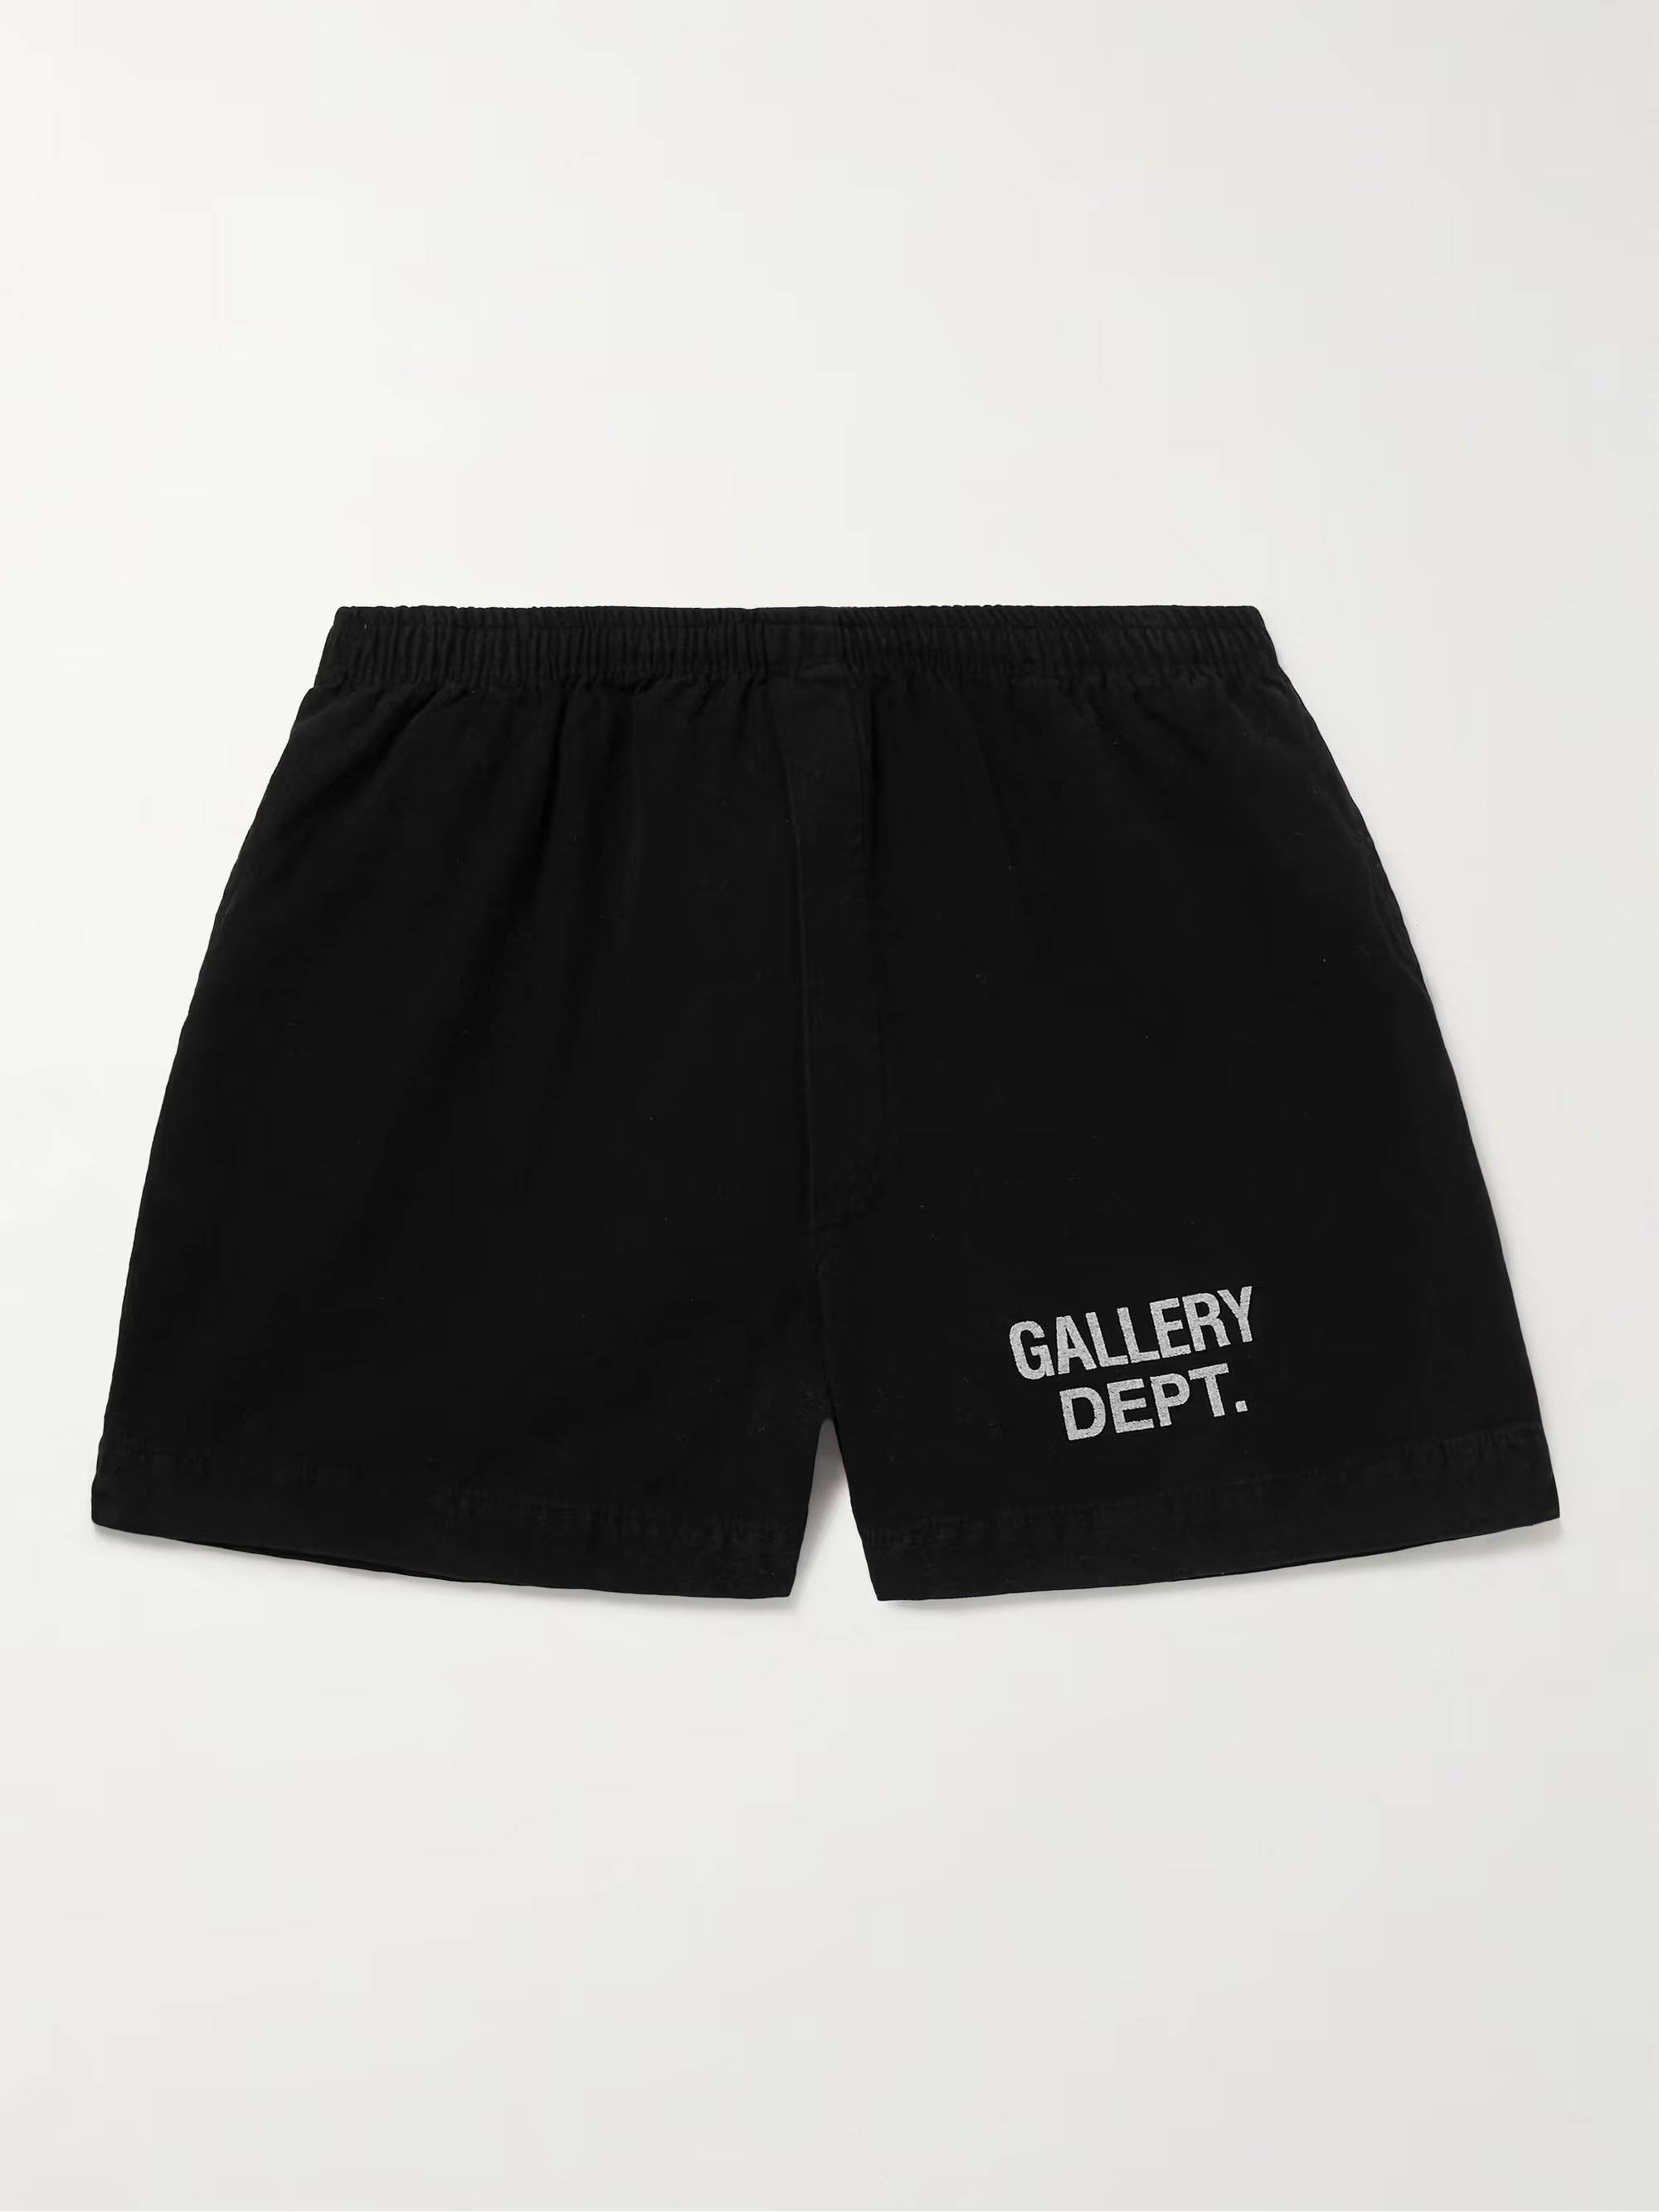 Gallery dept shorts-